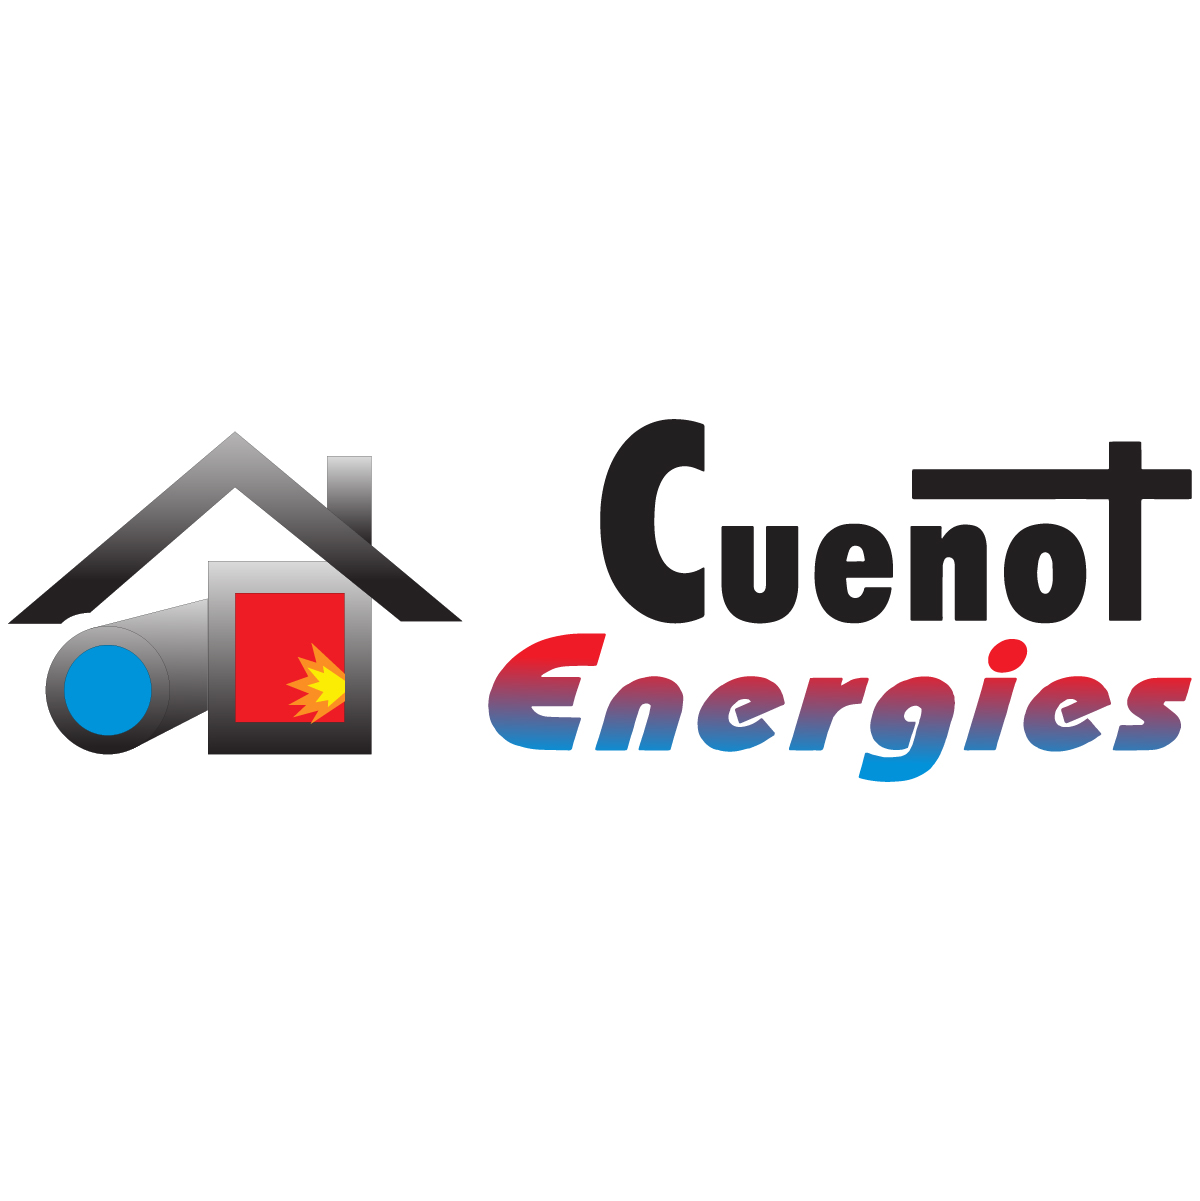 (c) Cuenot-energies.com